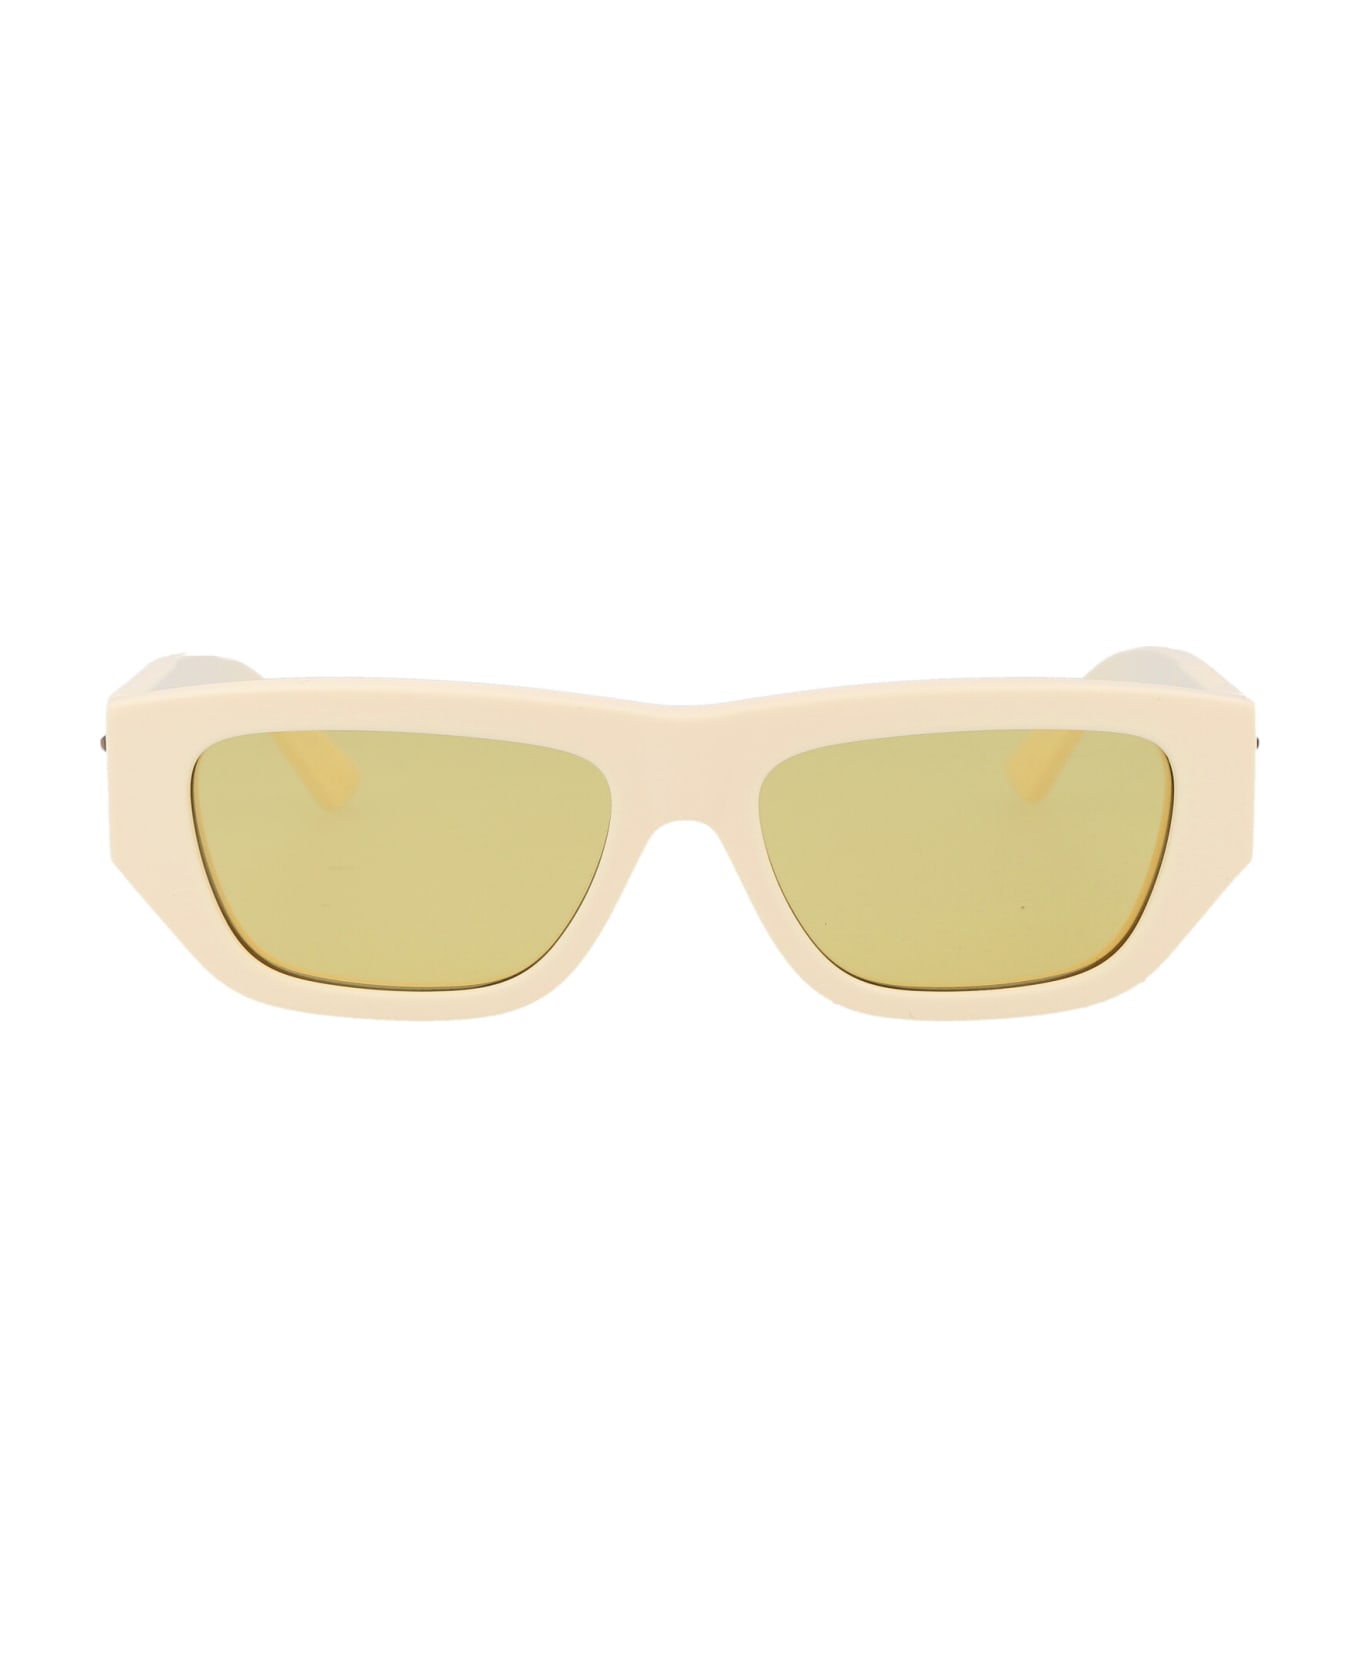 Bottega Veneta Eyewear Bv1252s Sunglasses - 003 IVORY IVORY YELLOW サングラス